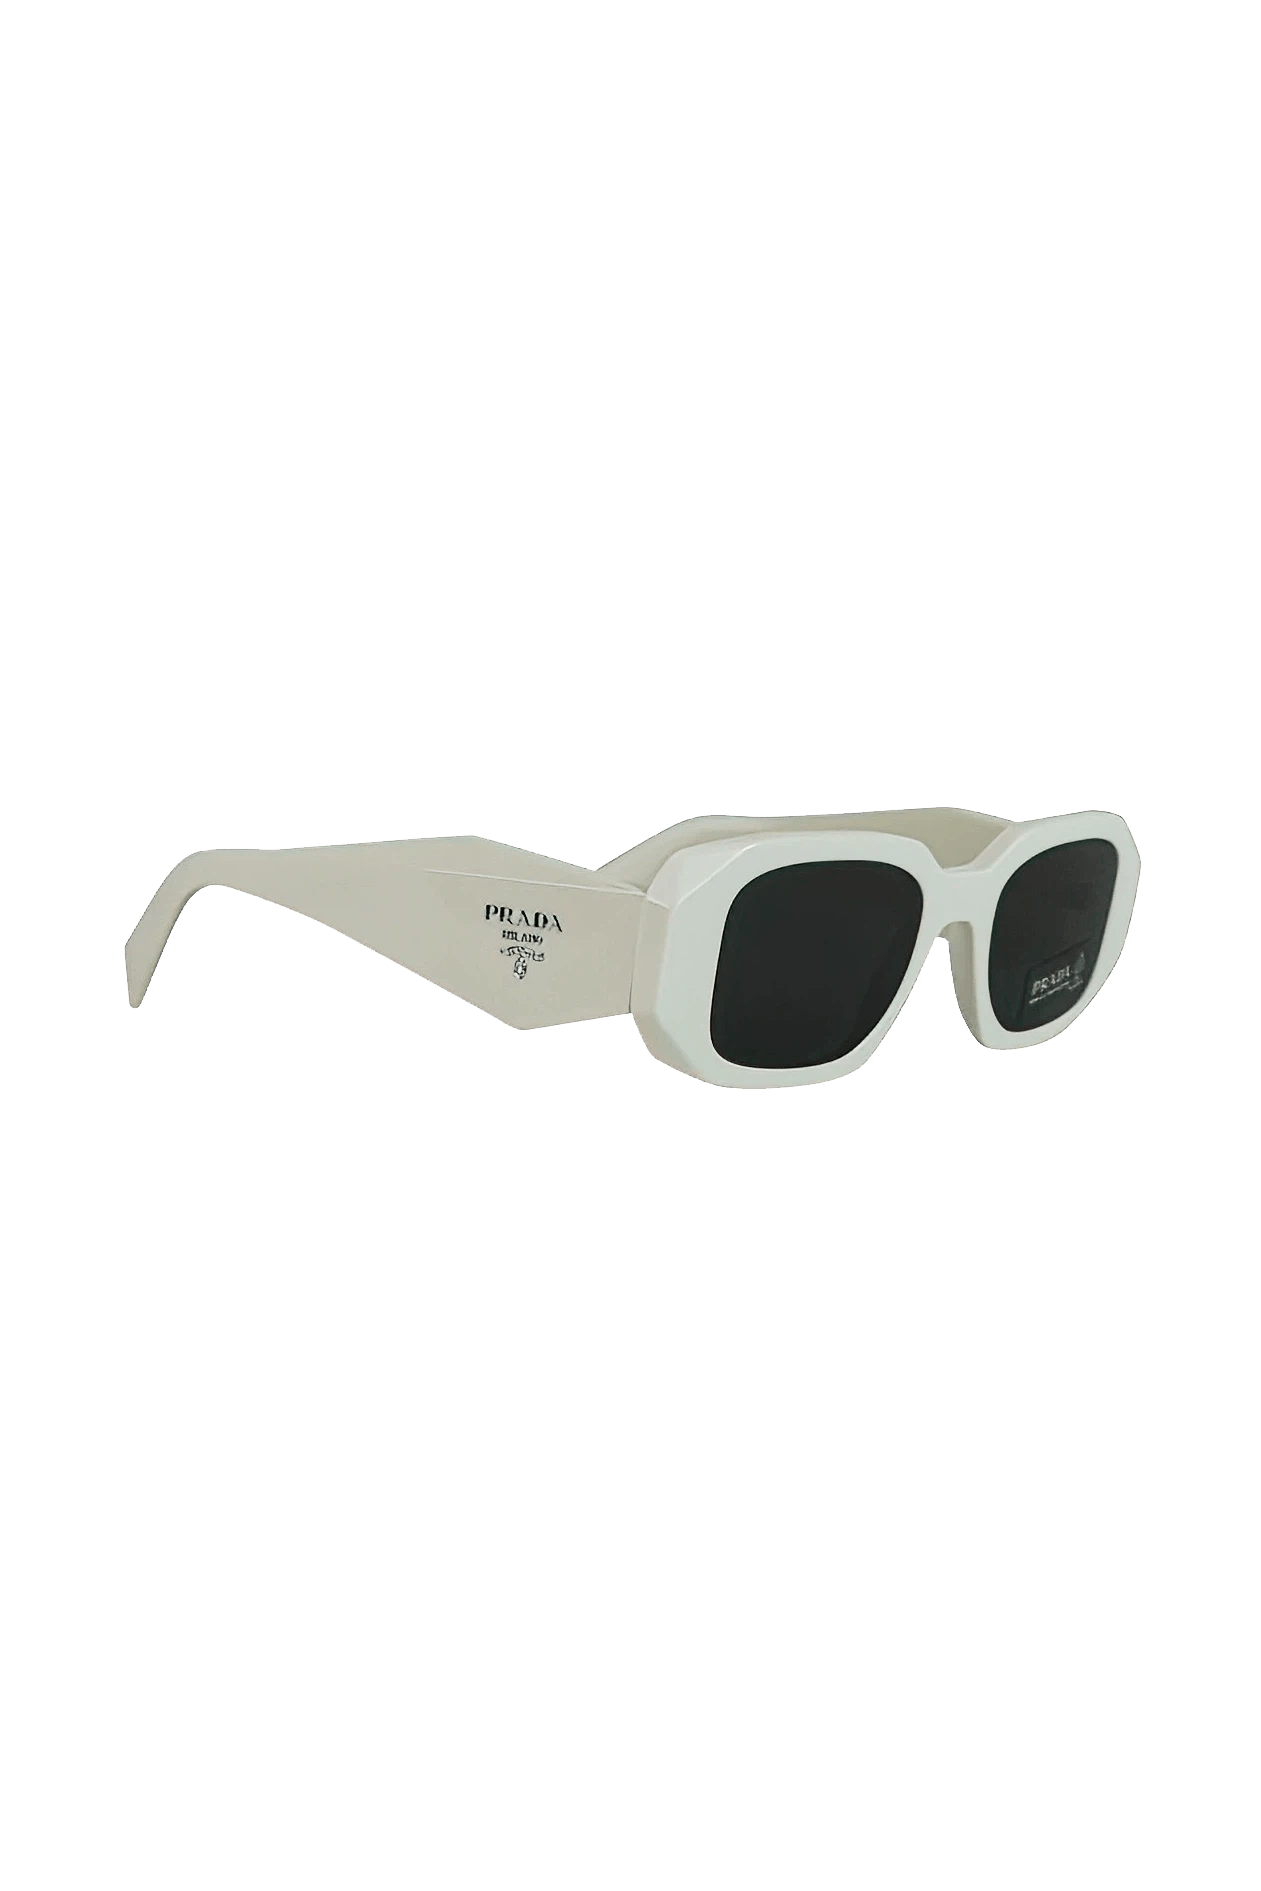 Prada NIB Talc White Sunglasses - Foxy Couture Carmel